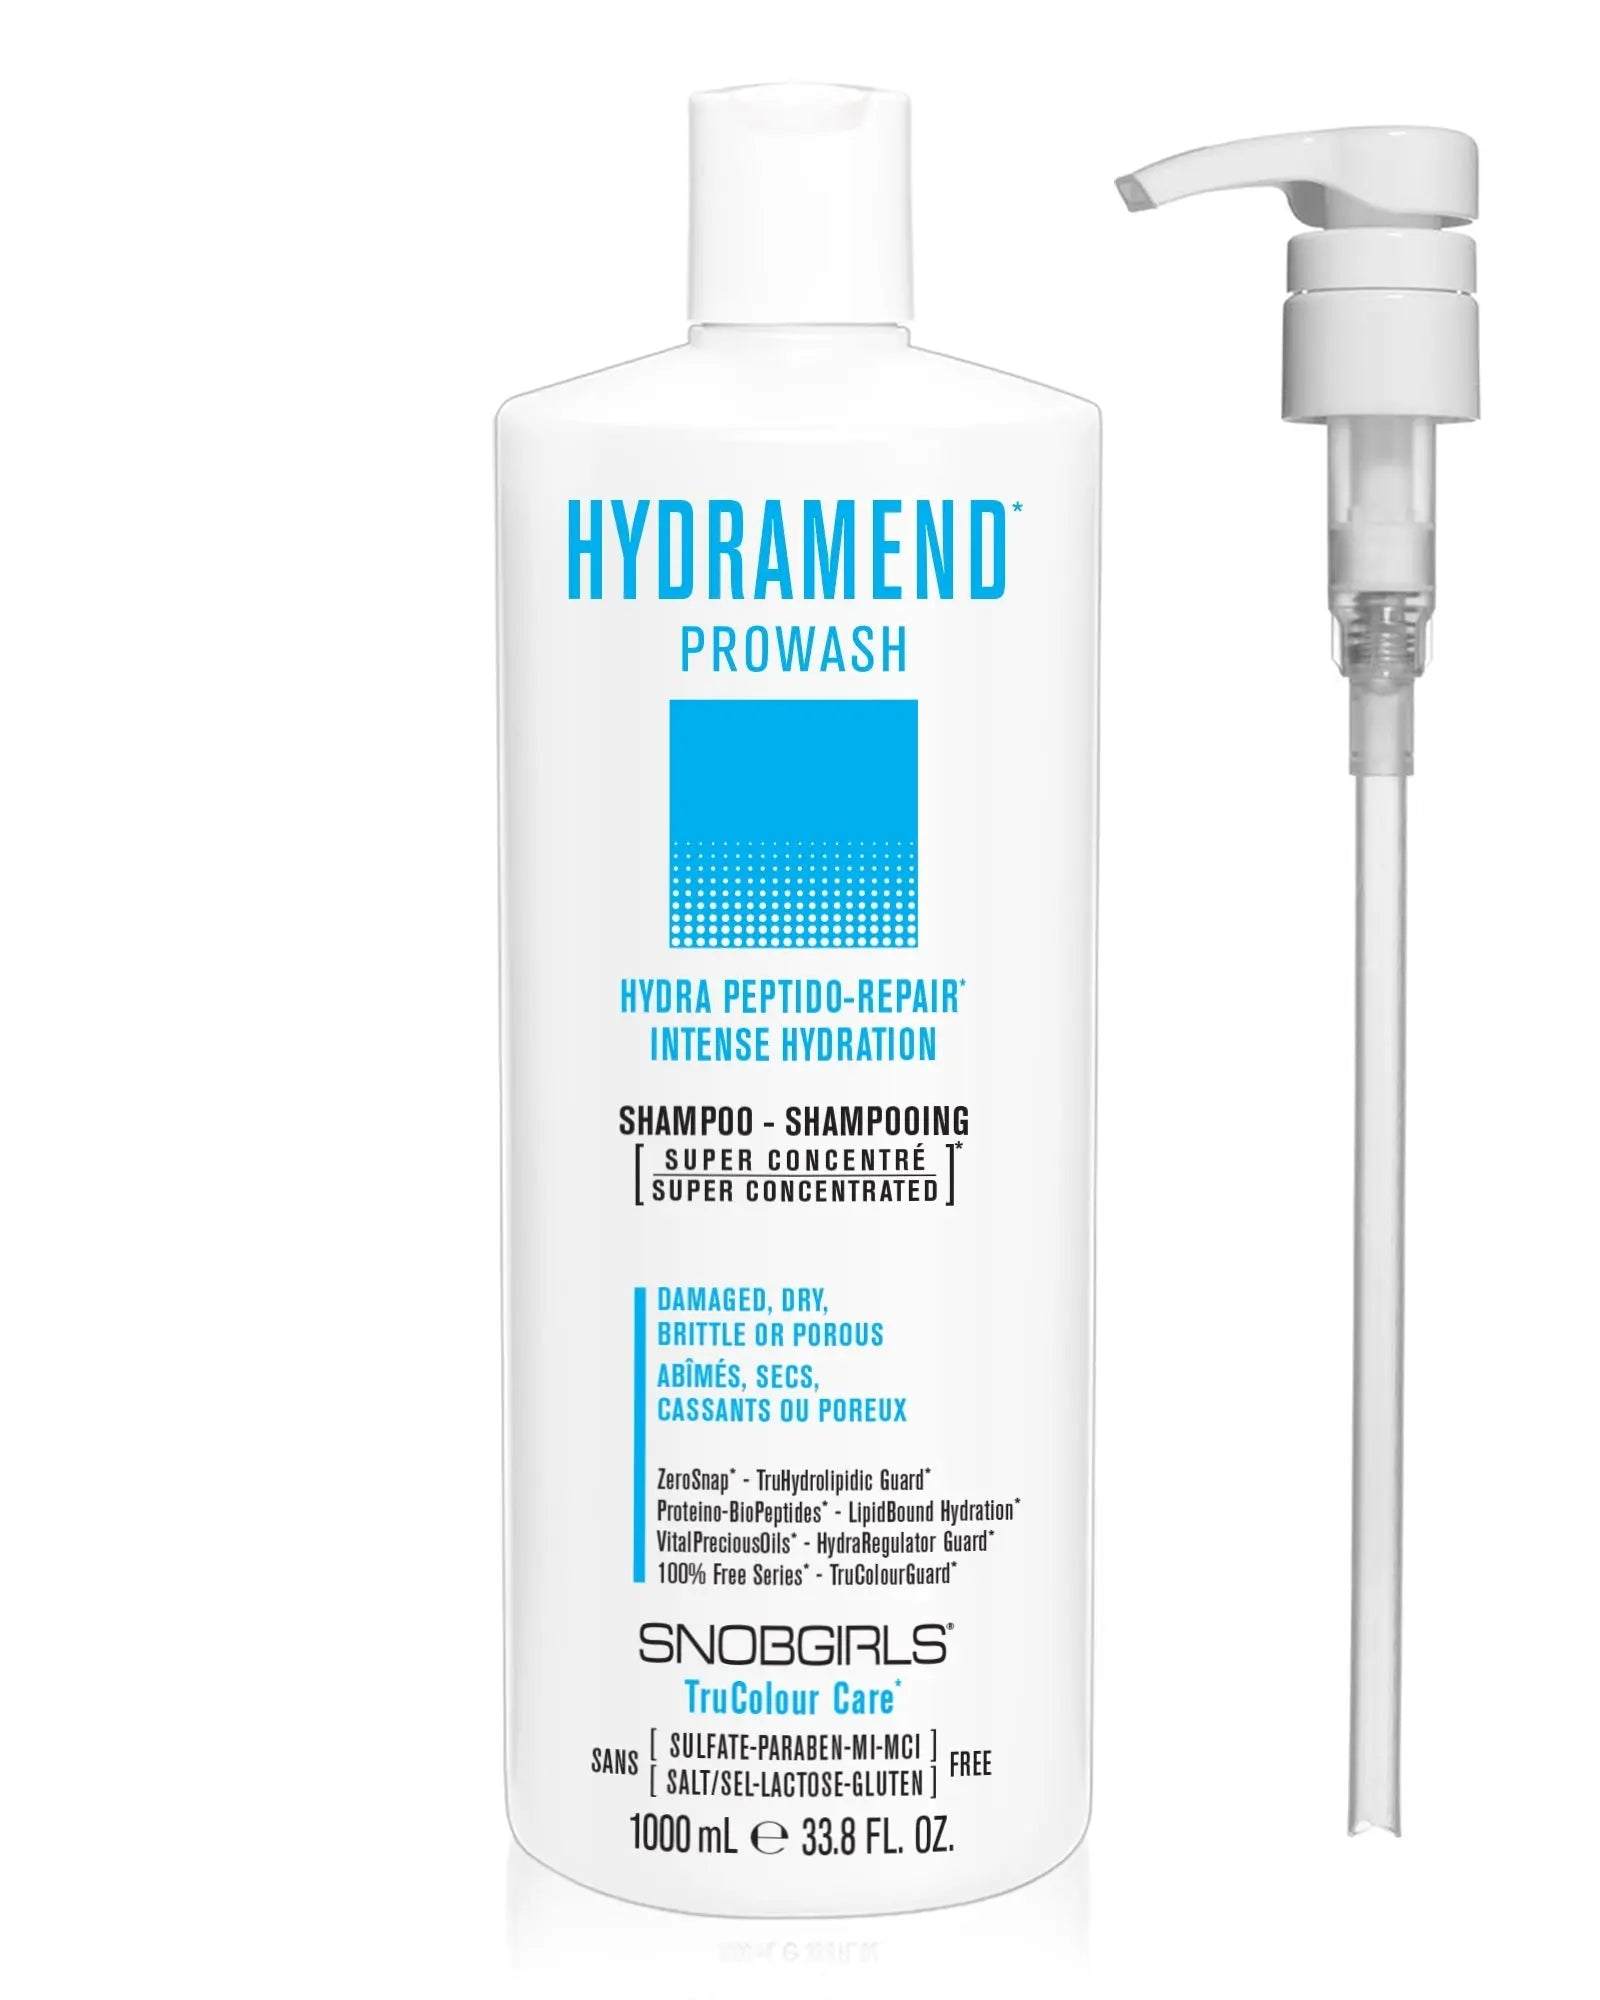 HYDRAMEND Prowash (shampoo) 33.8 FL. OZ. + Pump - SNOBGIRLS.com